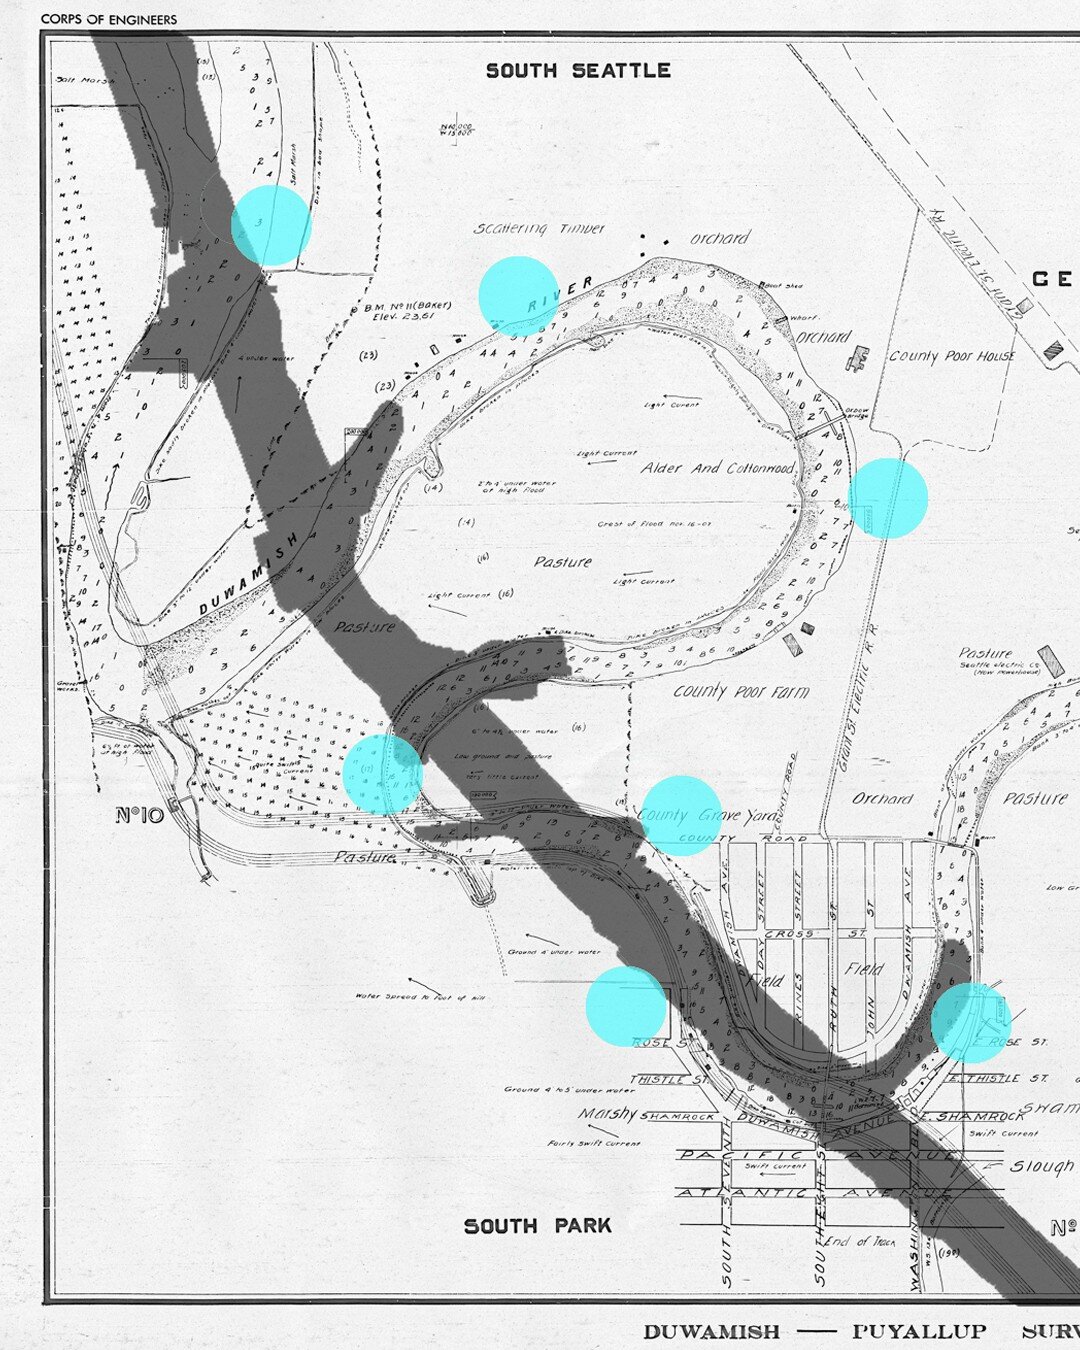 1907 Duwamish meanders through the 2022 Duwamish Waterway
.
.
.
#duwamishremains #georgetownseattle #duwamishriver #duwamishterritory #duwamishwatershed #duwamish #duwamishmeanders #duwamishwaterway